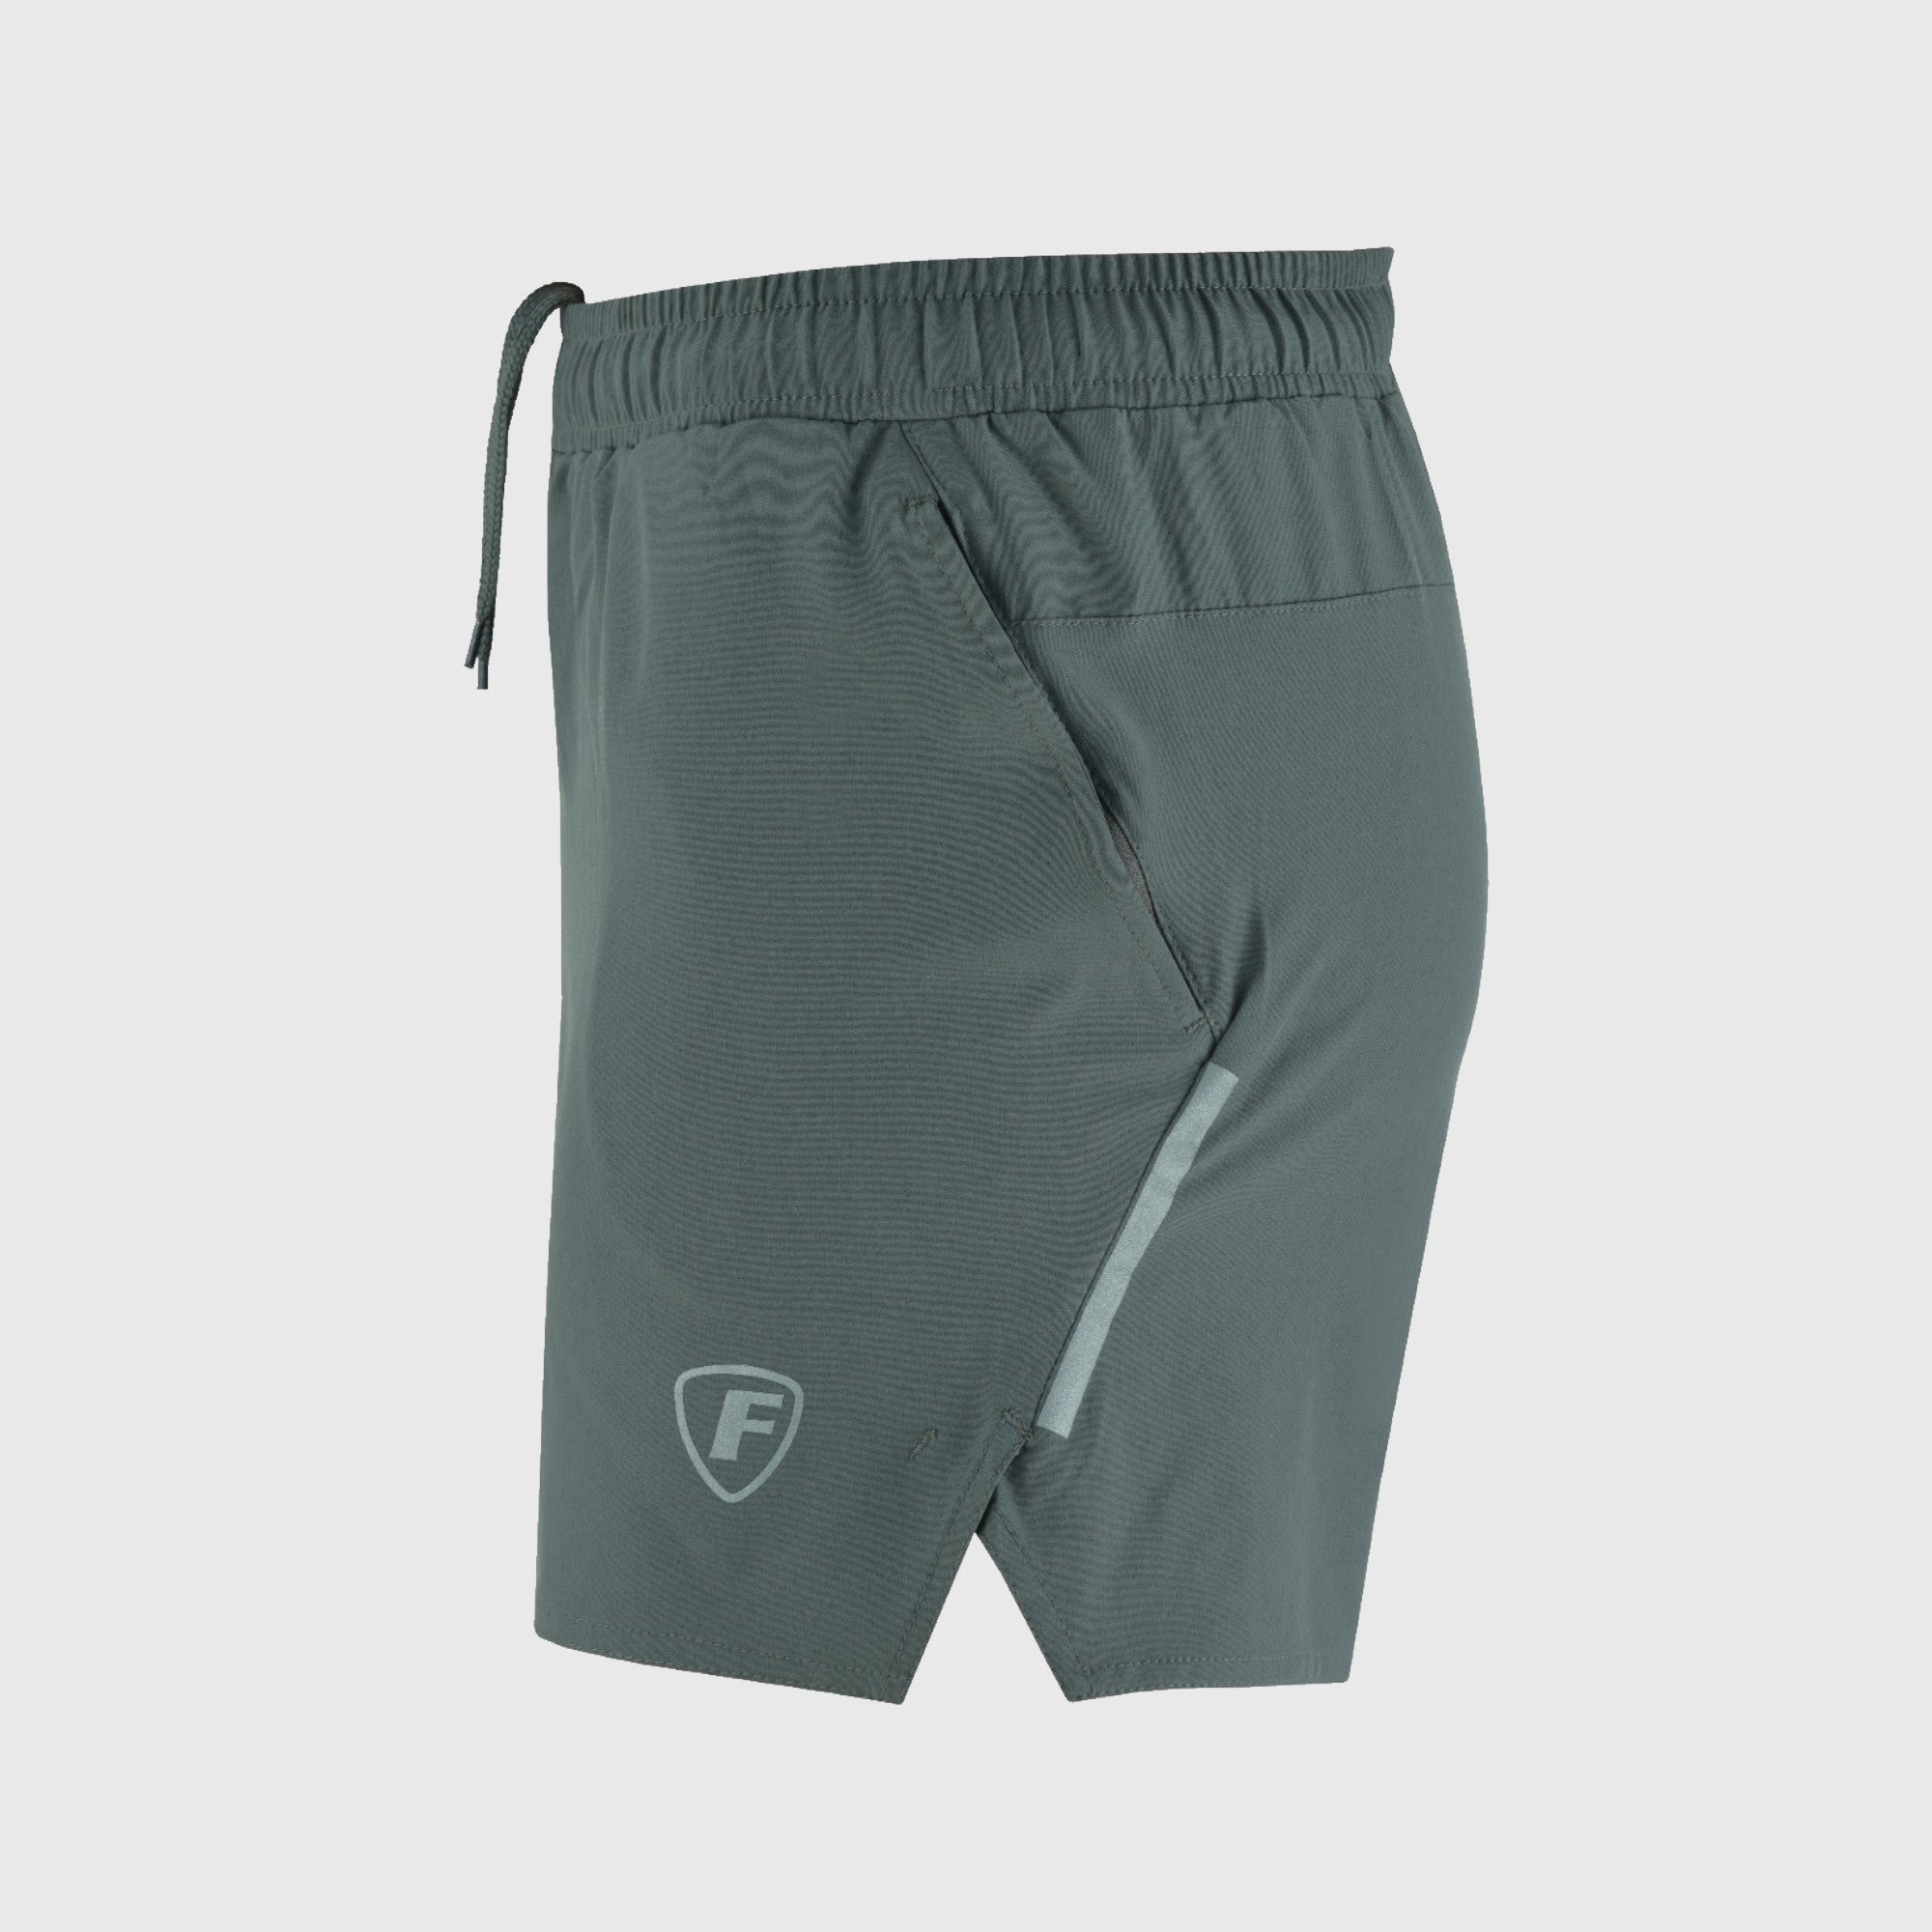 FDX Men's Gray Breathable Running Shorts Waist Belt Anti Odor Moisture Wicking & Perfect for Trekking, Tennis, squash & Gym Sports & Outdoor